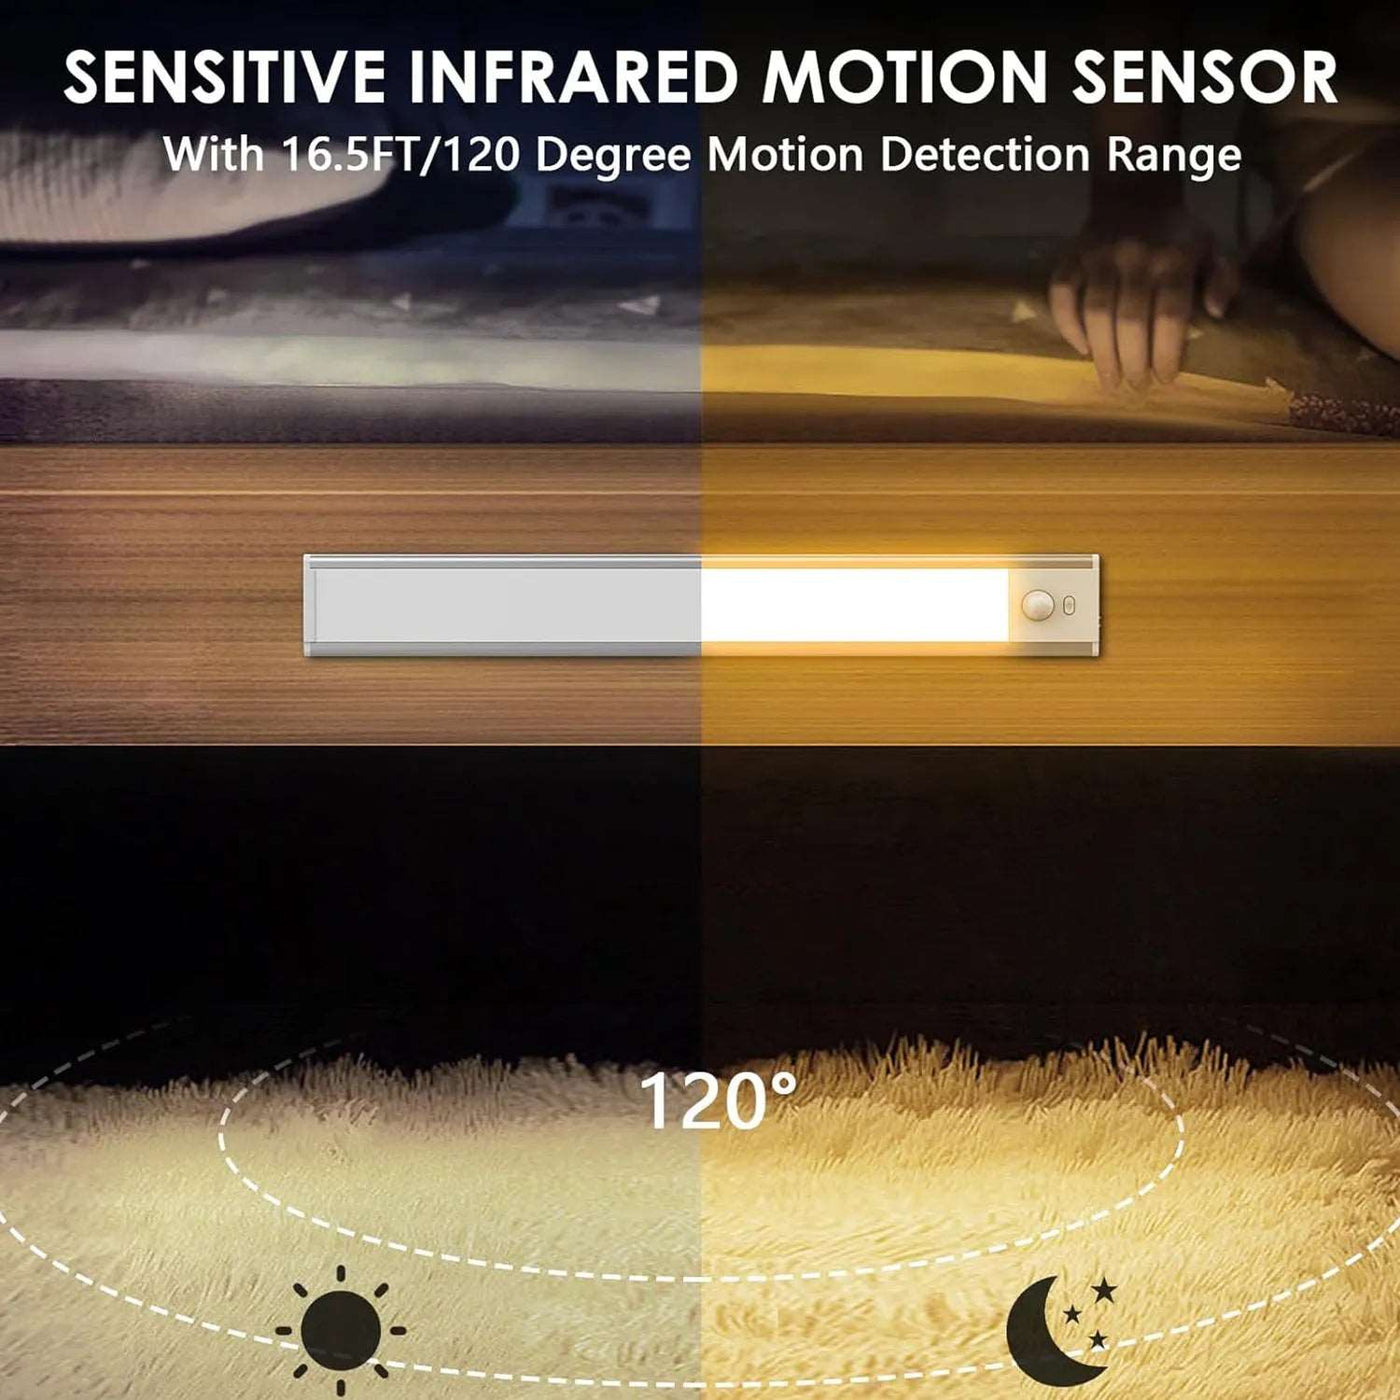 Muvit LED Rechargeable Motion Sensor Cabinet Light